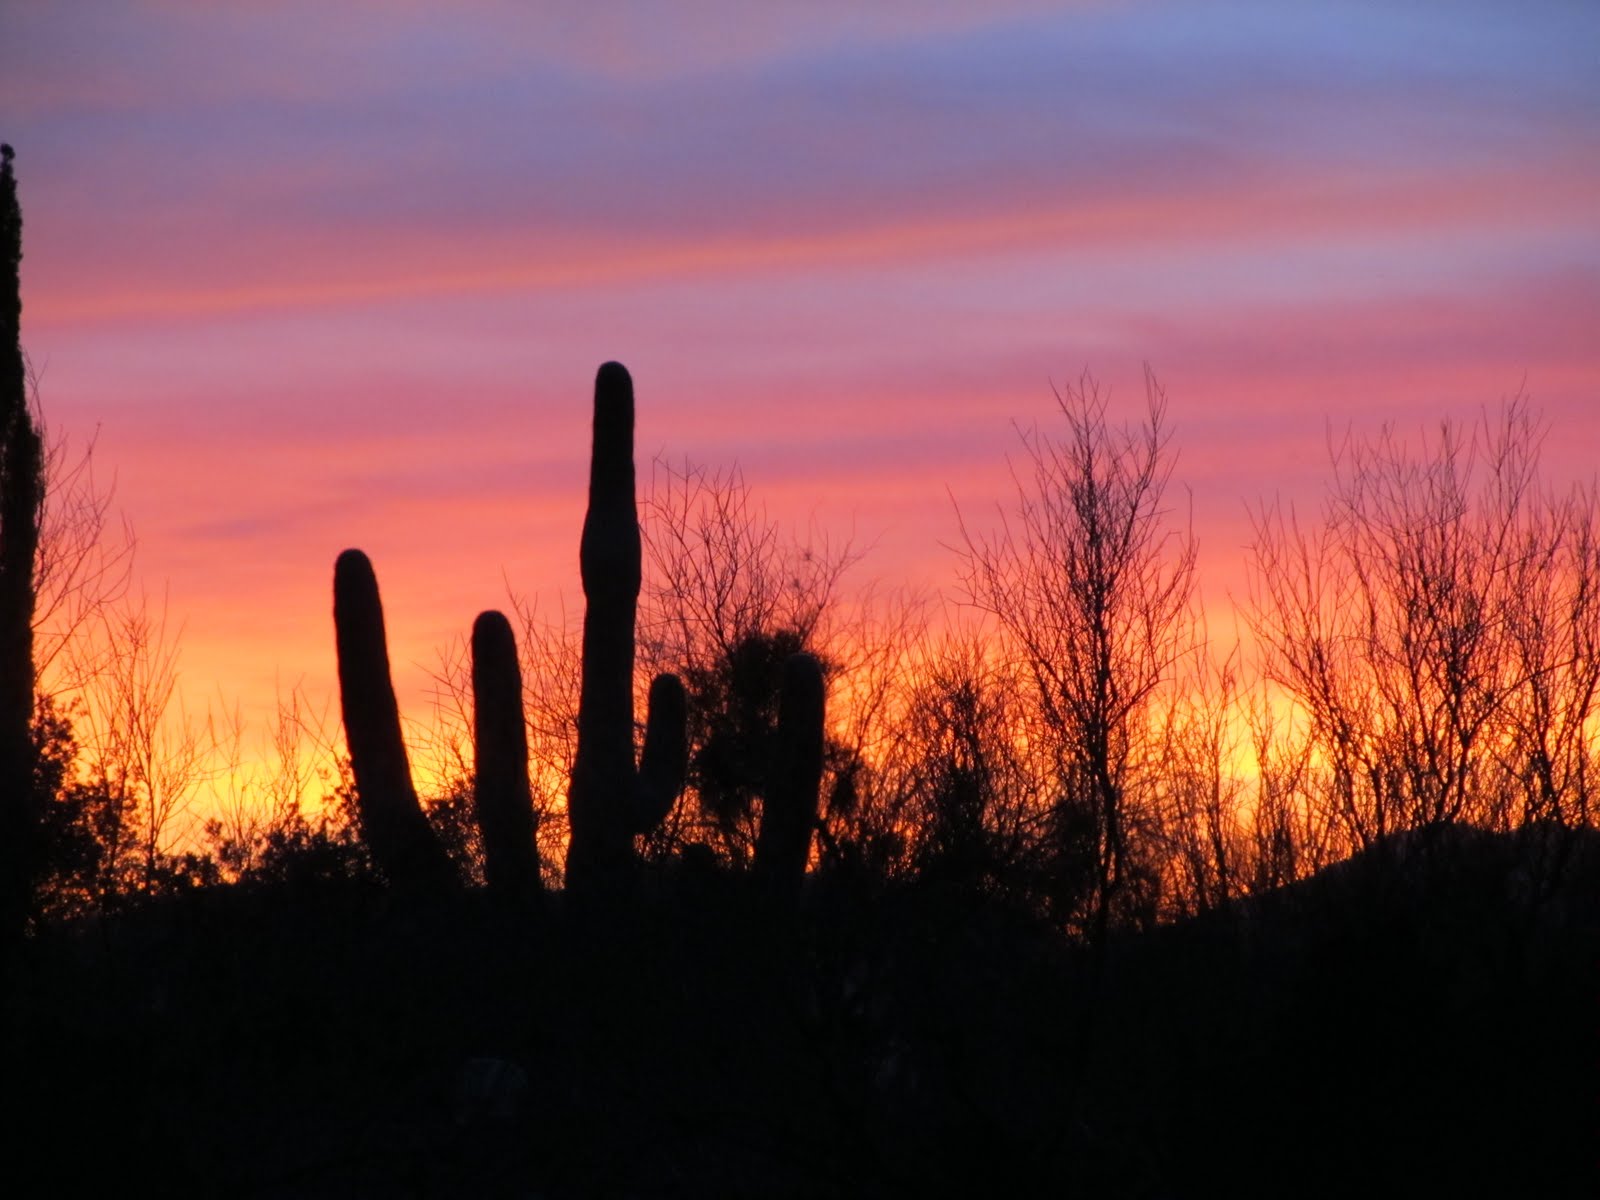 In the Sonoran Sun: The Desert Spring